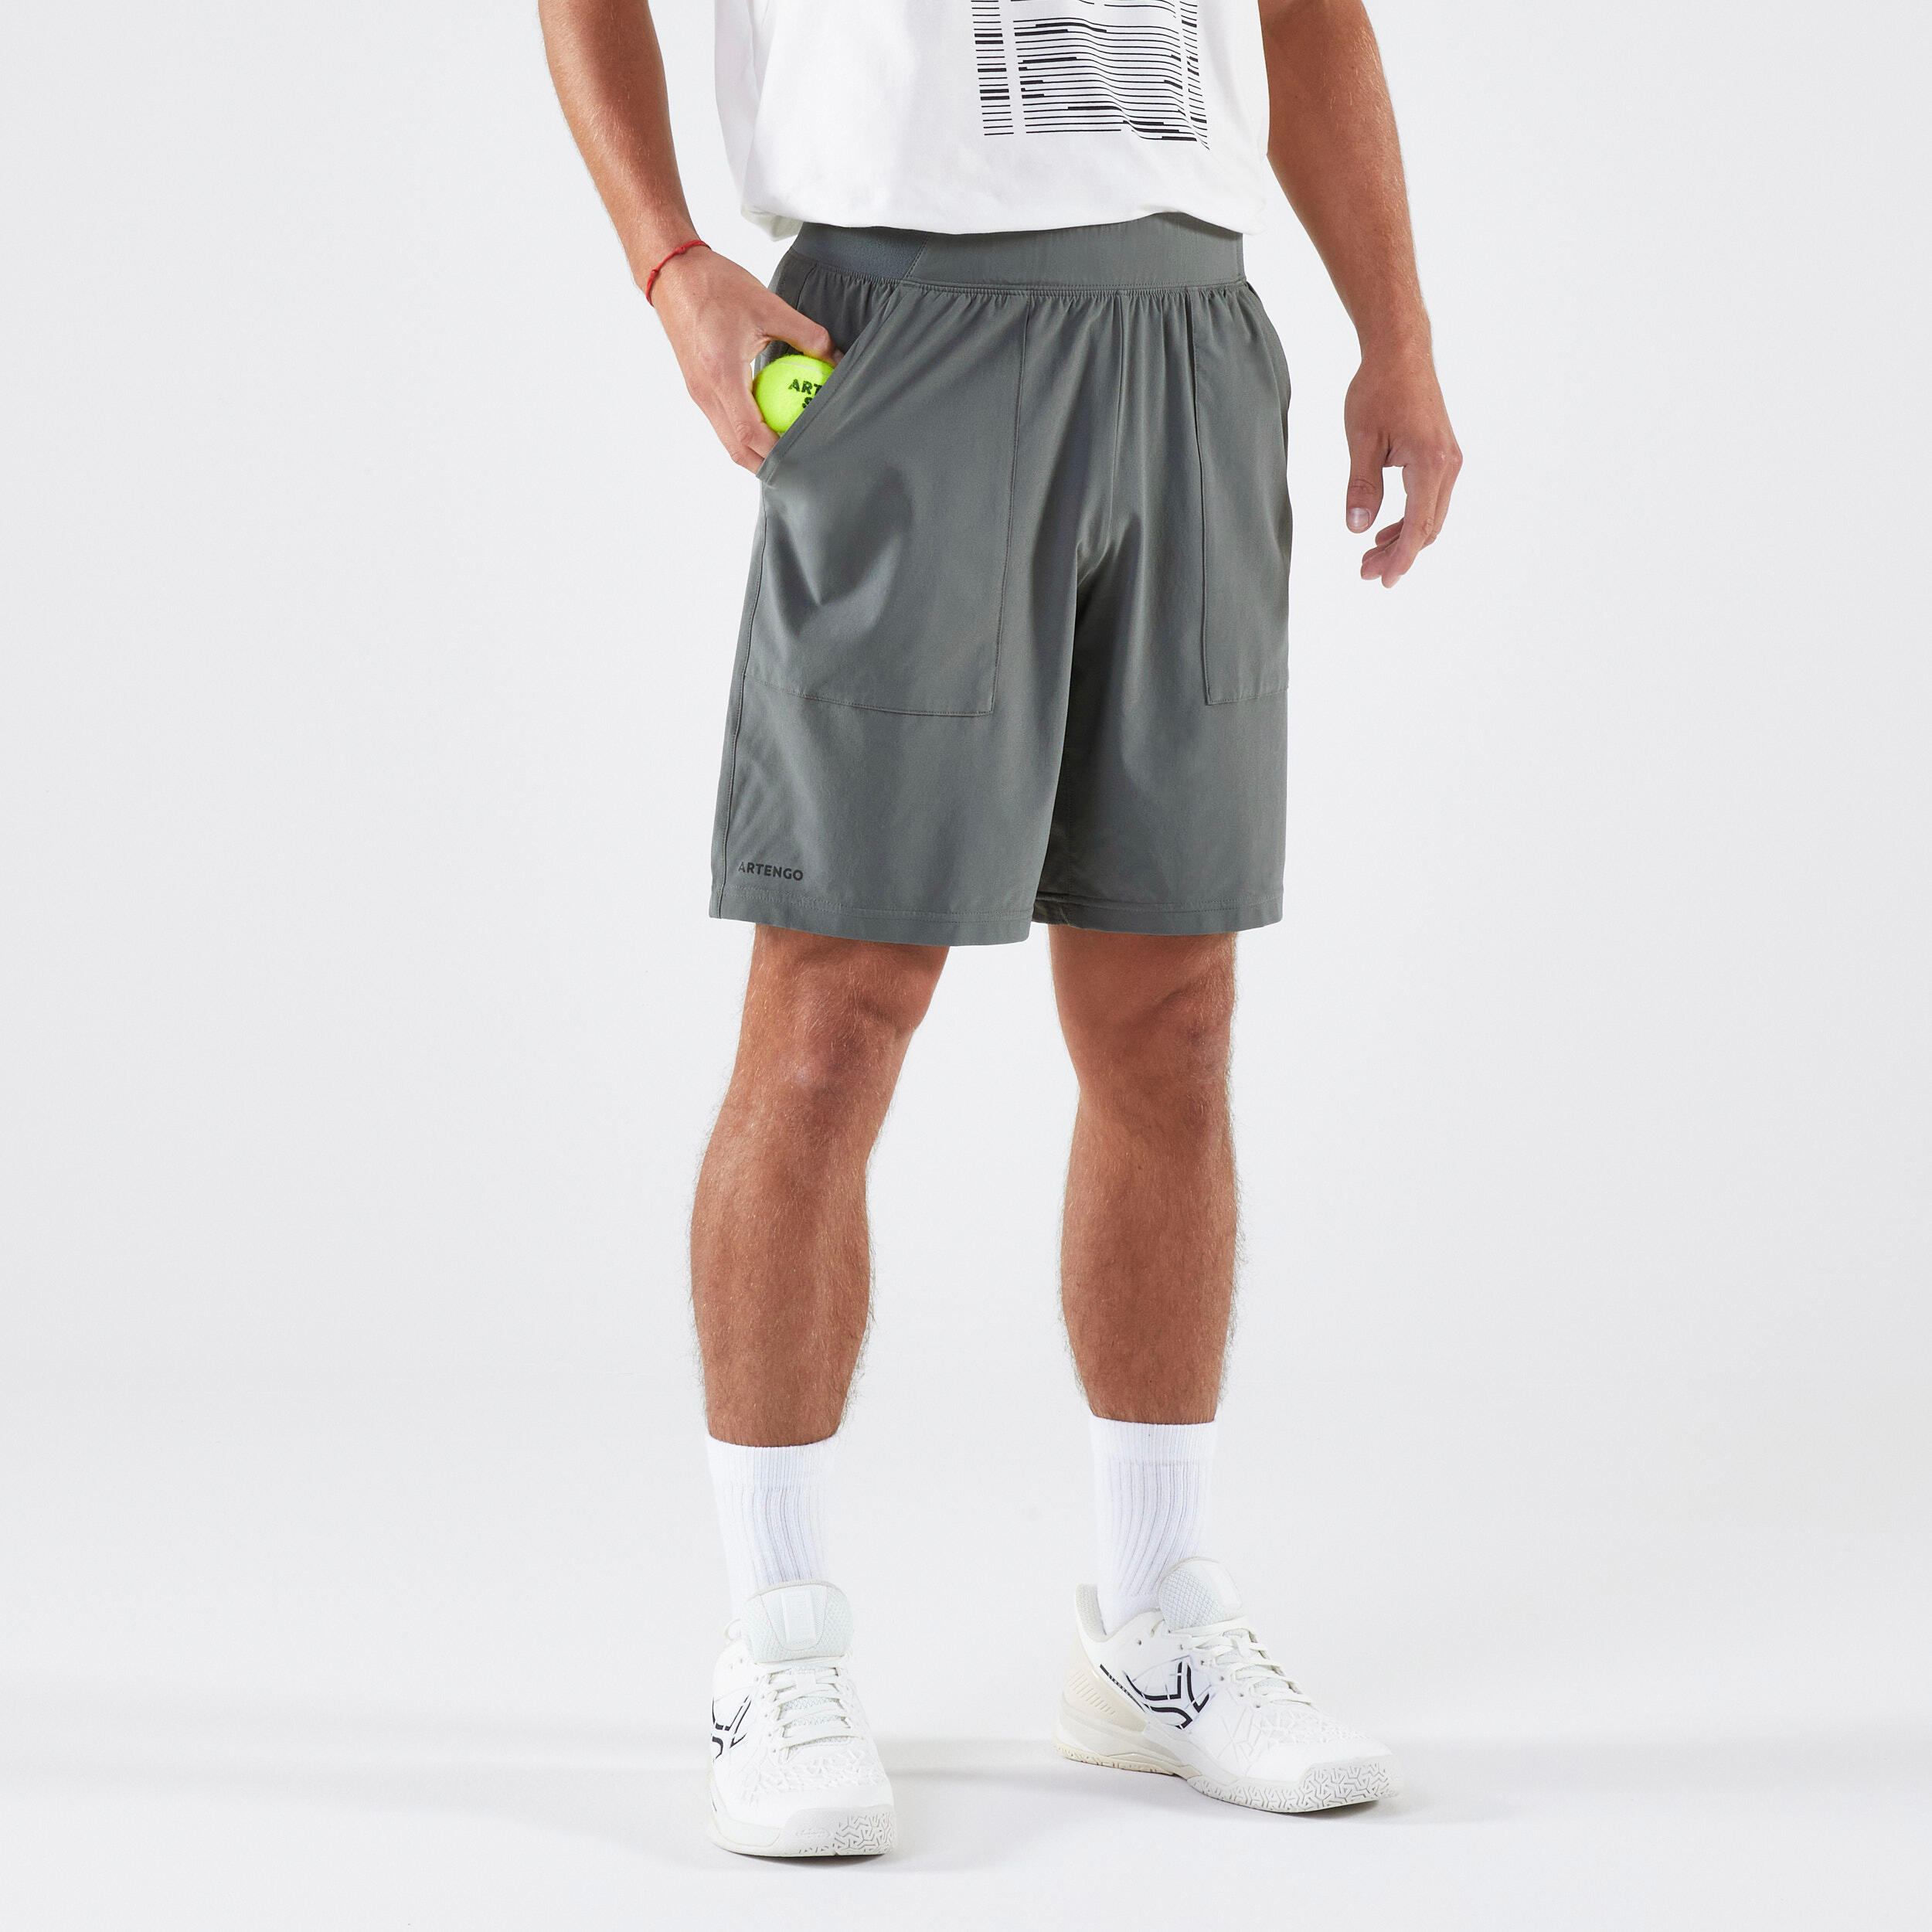 Men's Breathable Tennis Shorts Dry - Khaki 1/6